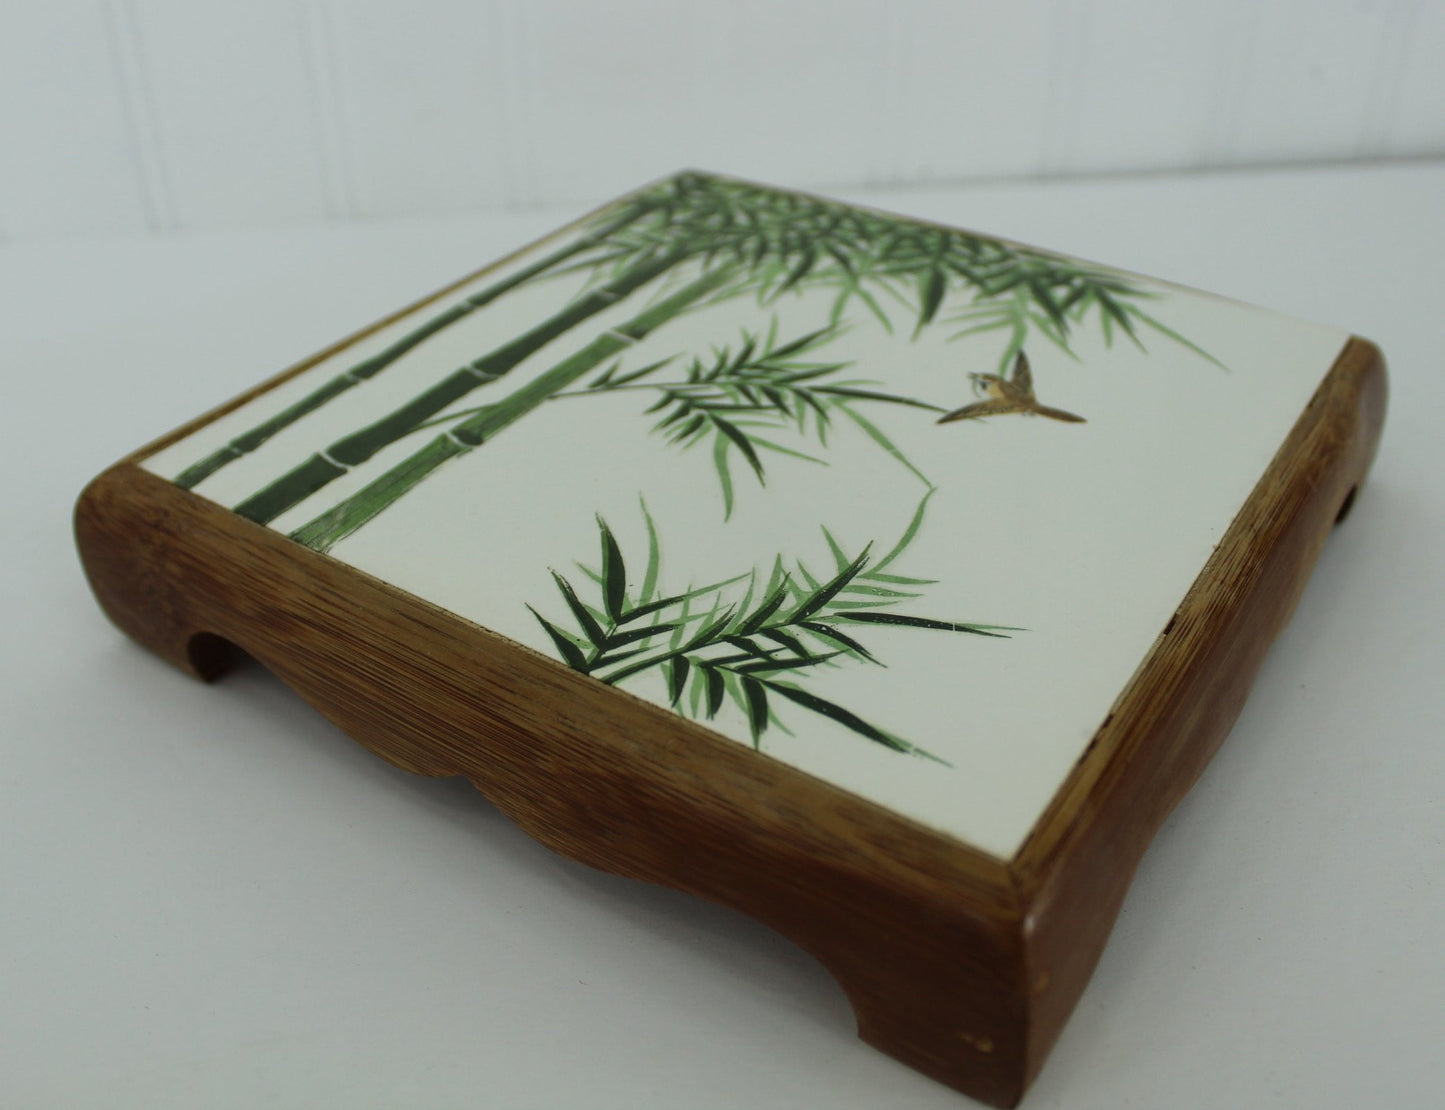 ITO'S Bamboo Crafts Tile Trivet - Japan Vintage Bamboo Stand Ceramic Tile